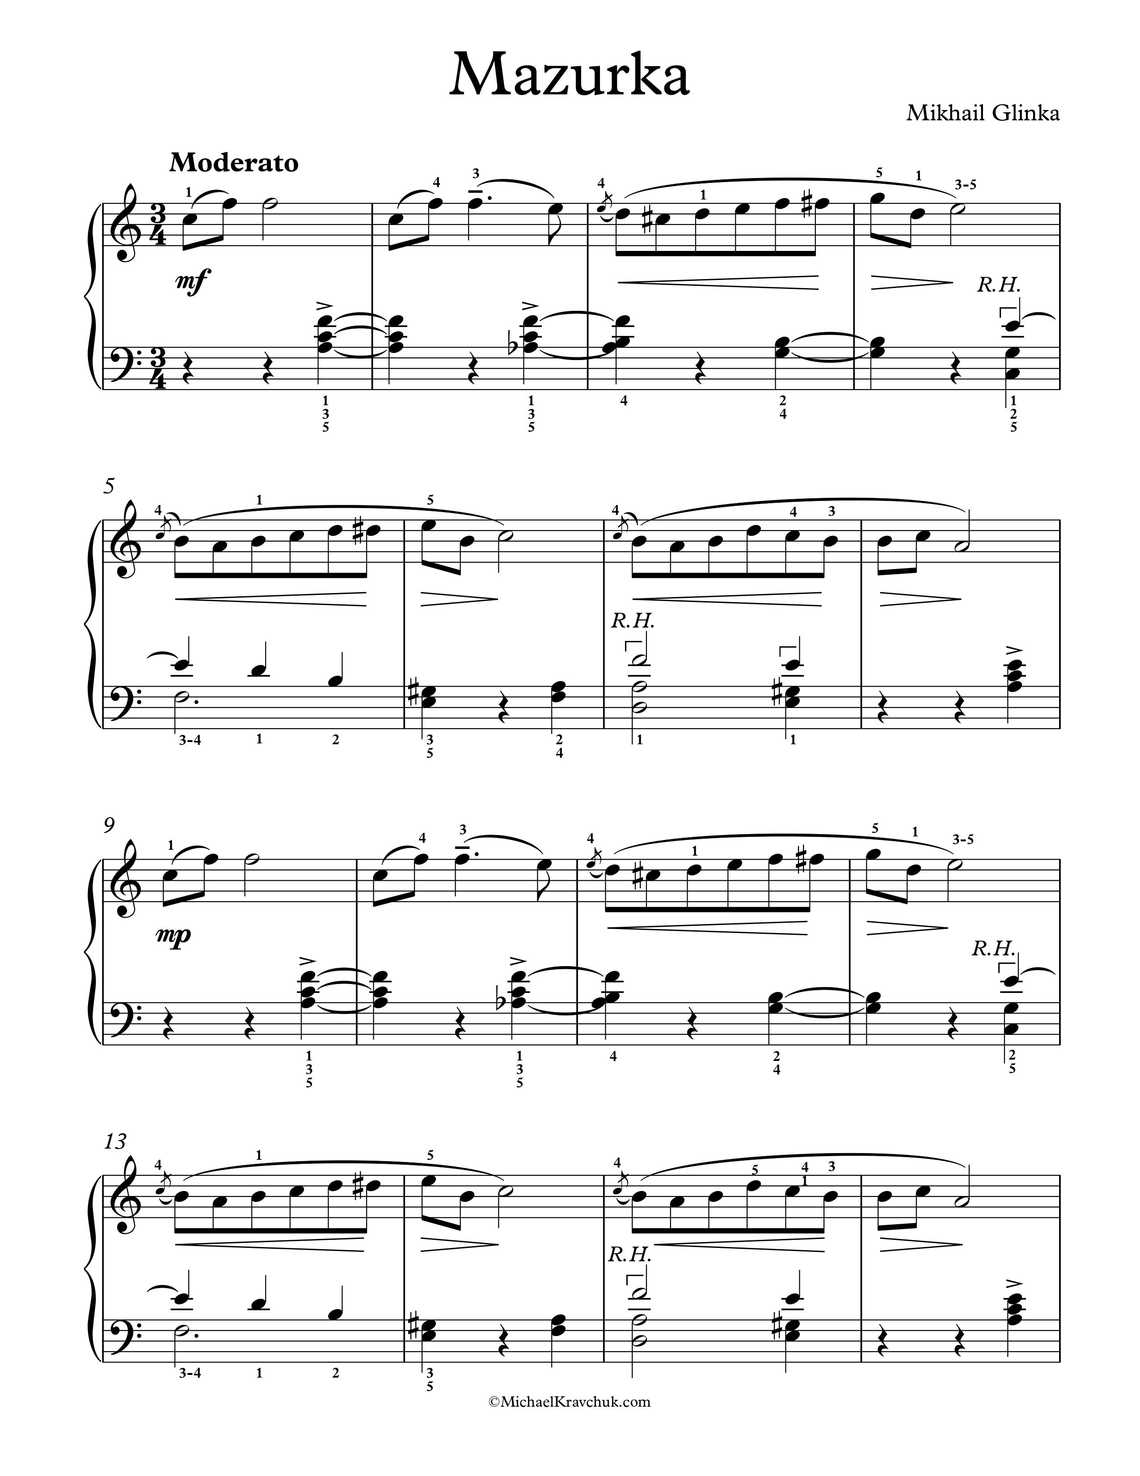 Free Piano Sheet Music - Mazurka in C Major - Glinka